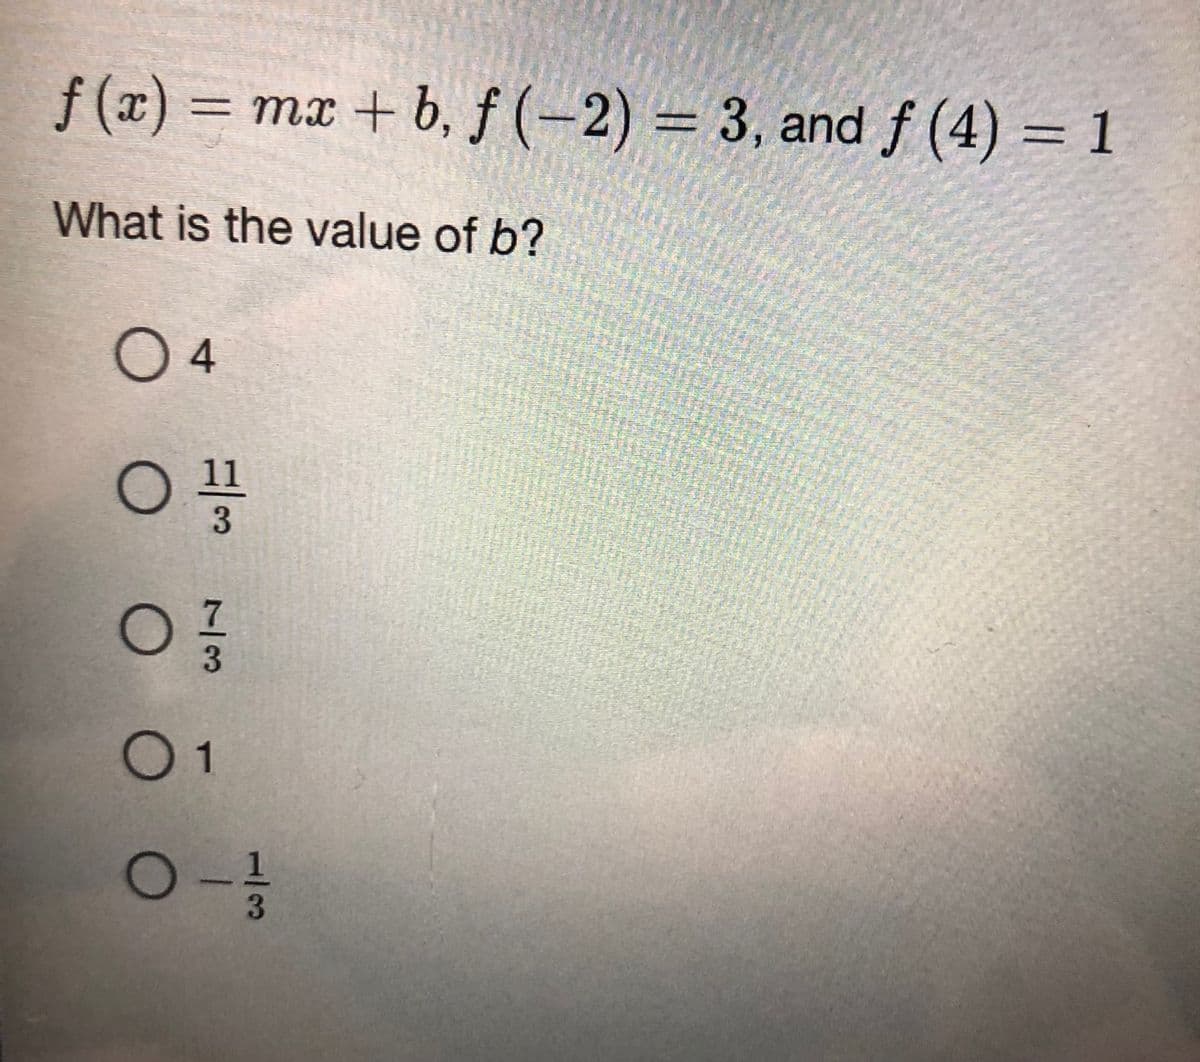 f(x) = mx +b, f(-2) = 3, and f (4) = 1
What is the value of b?
04
O
11
3
O
73
01
0-1/13
THEATELE LA
AMMA
MER
h
HAPA TA